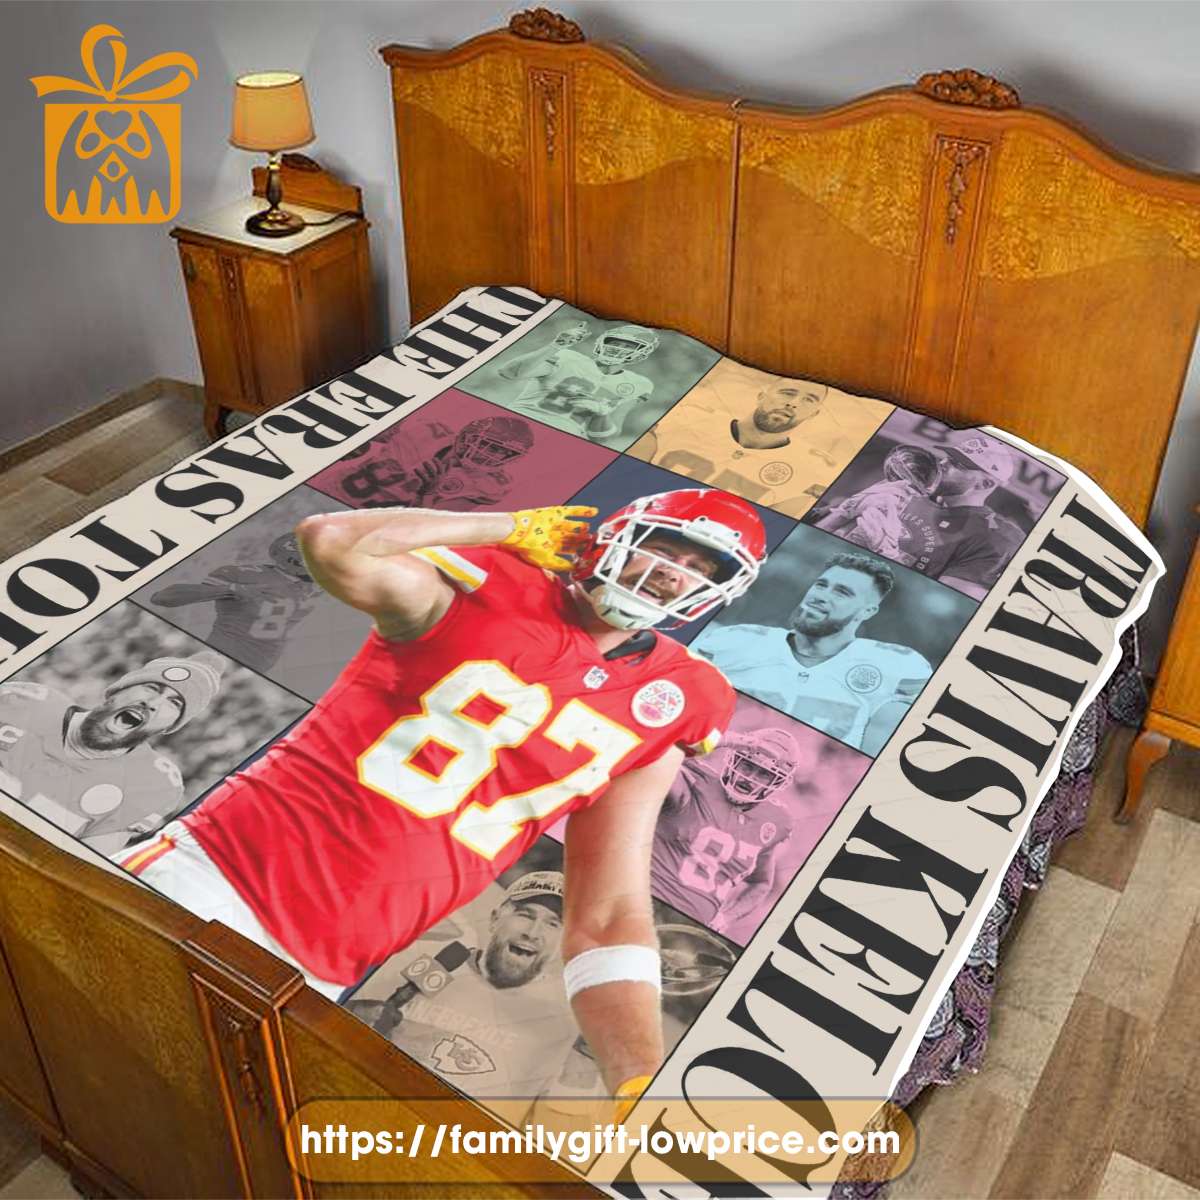 Travis Kelce The Eras Tour Blanket - Vintage Design & Ultimate Football Fan Gift